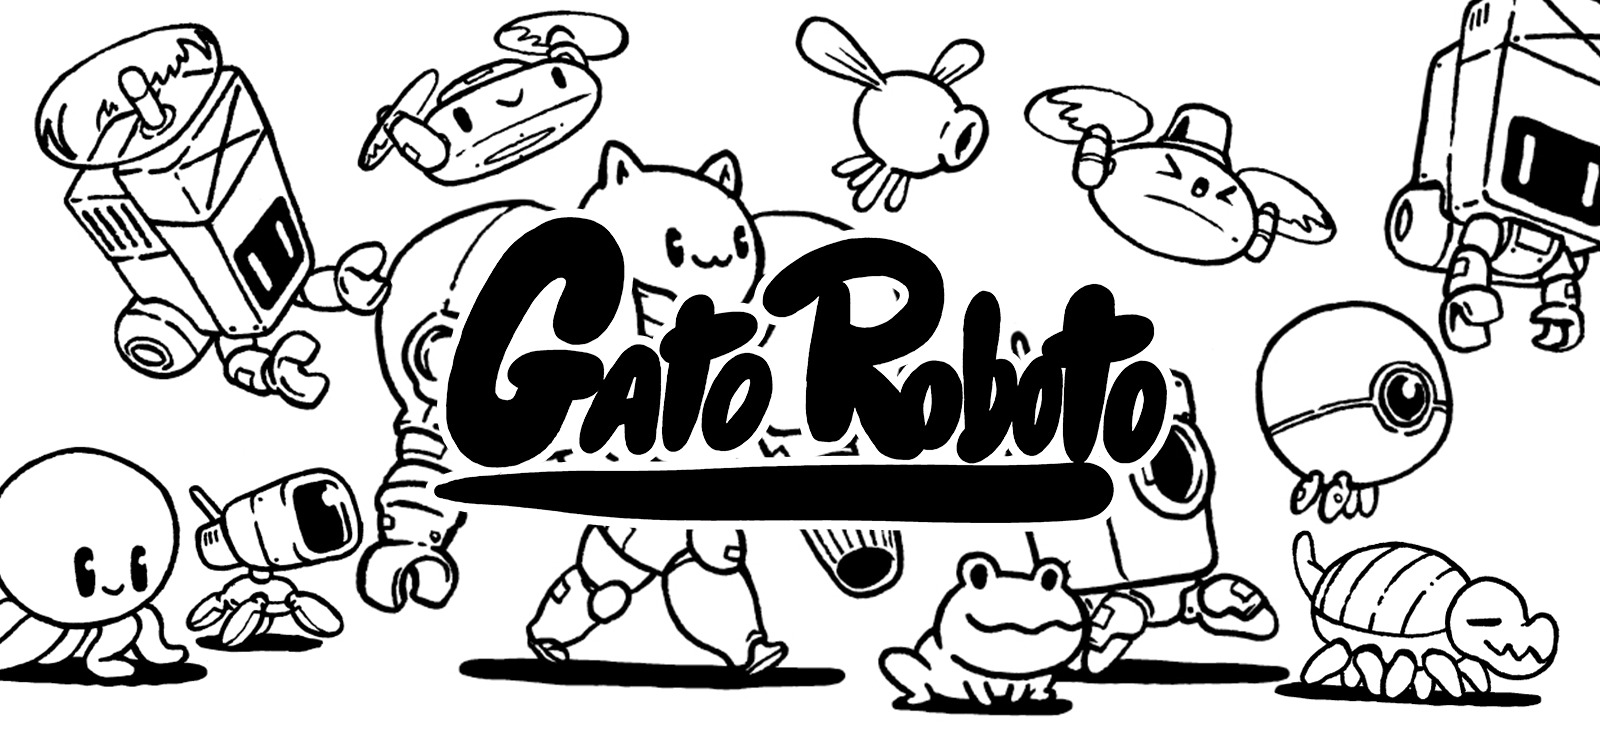 download switch gato roboto for free